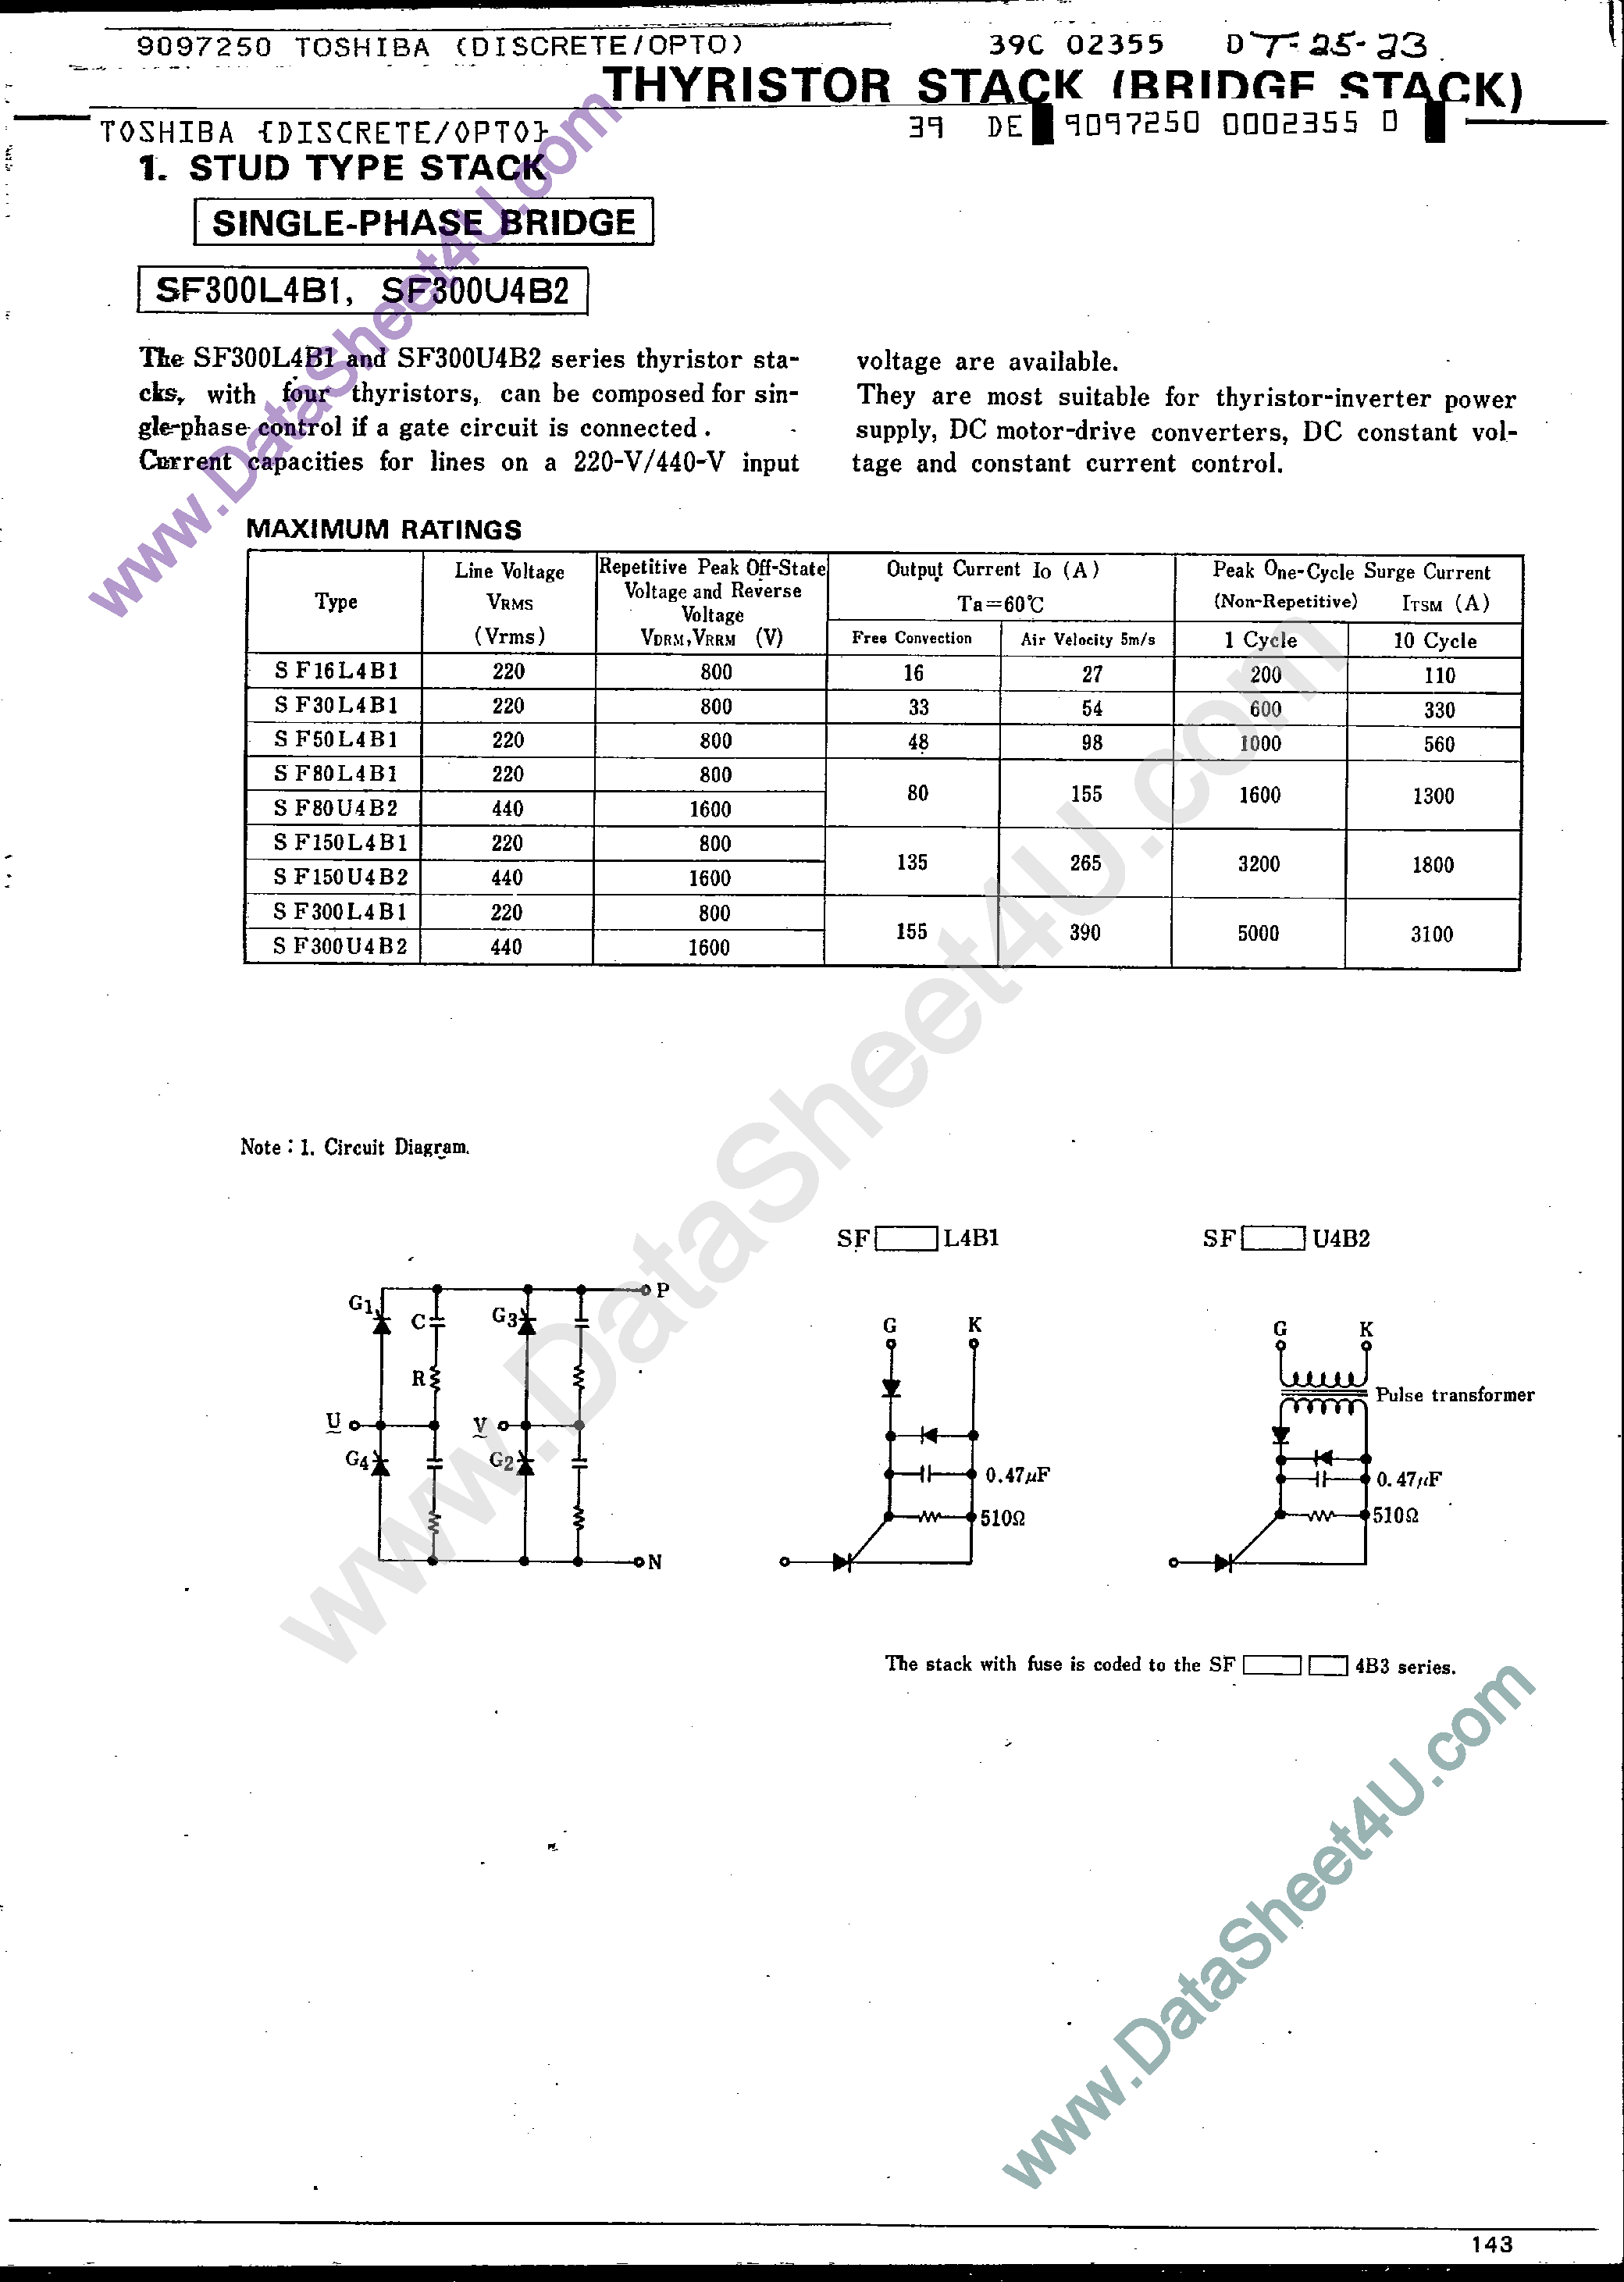 Datasheet SF150L4B1 - (SF1xxxx) Stud Type Stack / Single-Phase Bridge page 1